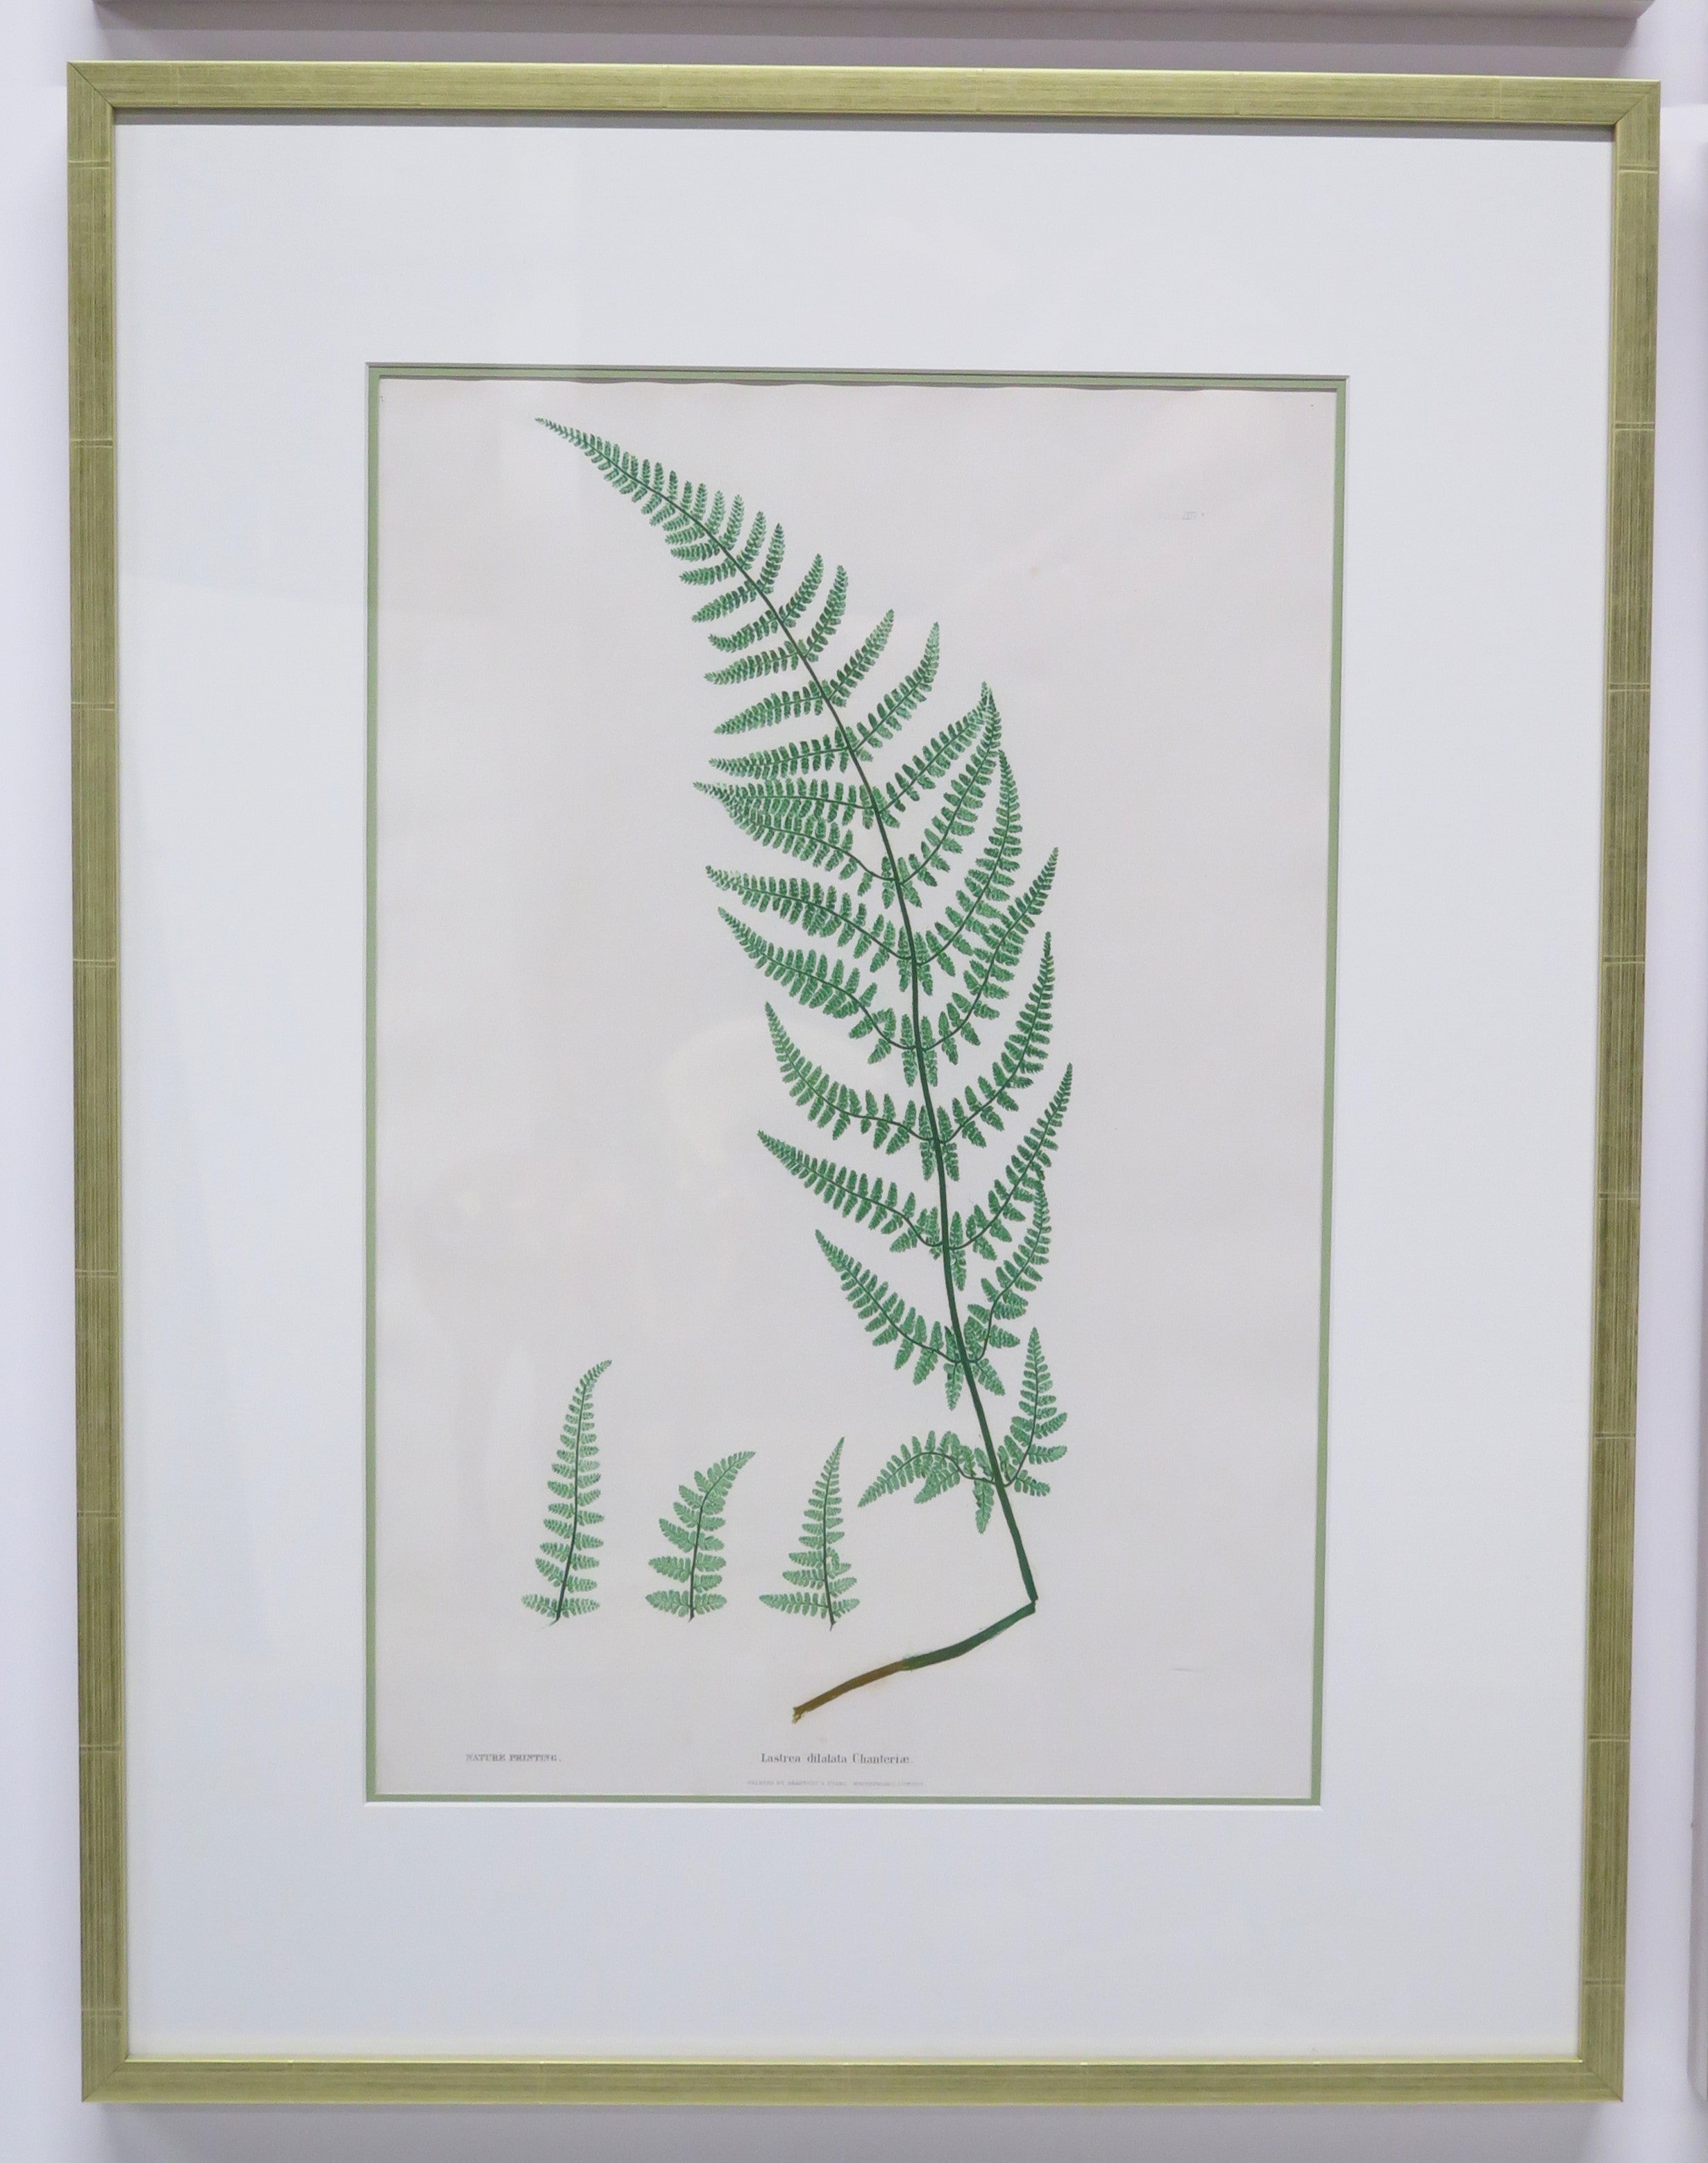 Six ''Nature Printed'' Ferns by Henry Bradbury (English, 1821-1887)